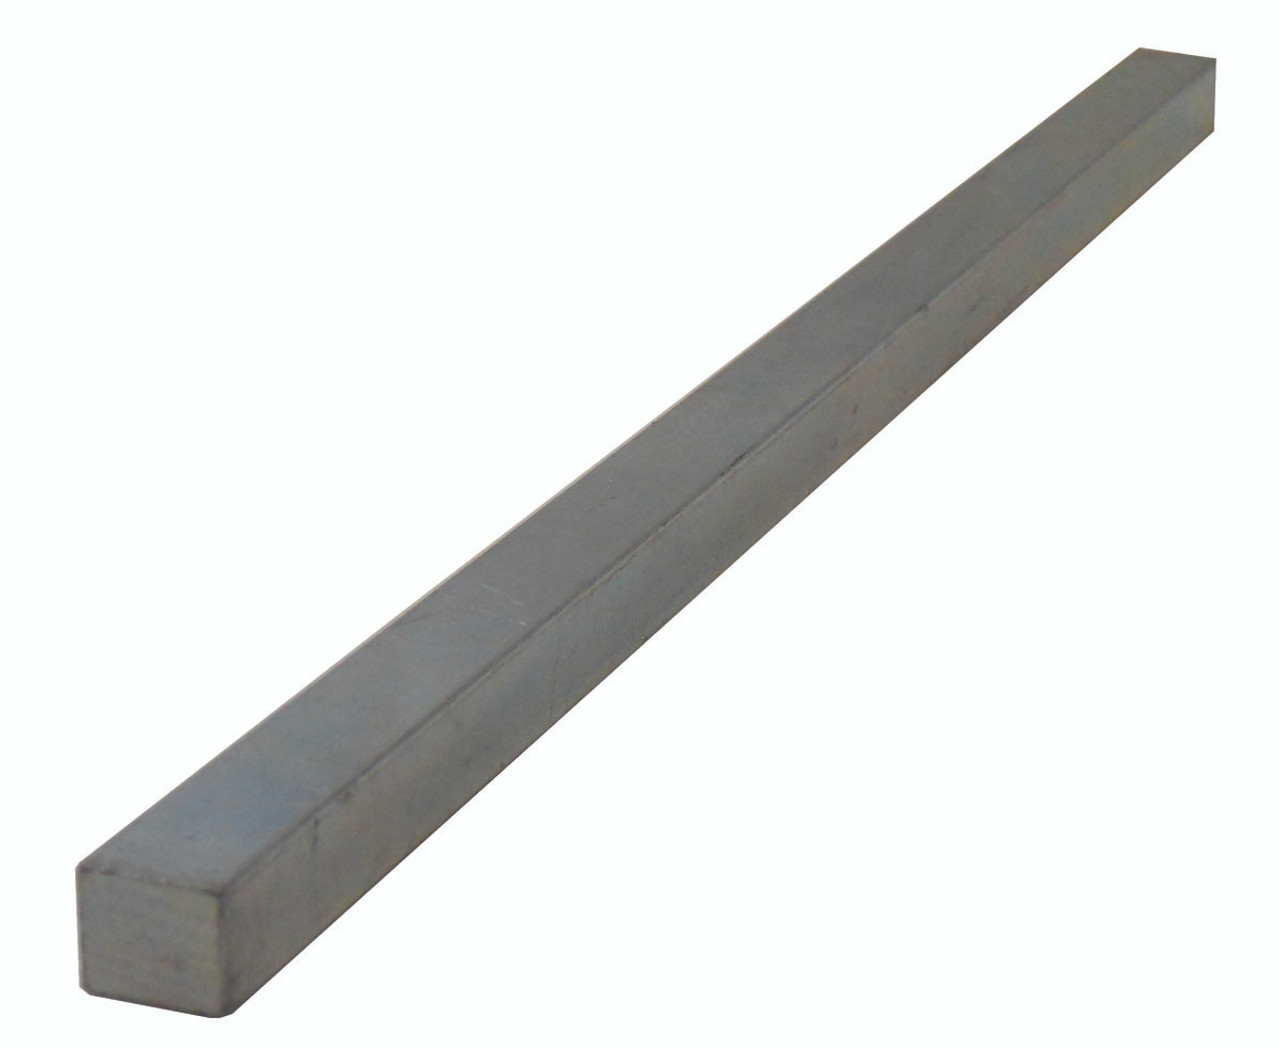 Rectangular SAE 3/8 x 3/4 x 12" Zinc Plated Steel Keystock  .375-750-12